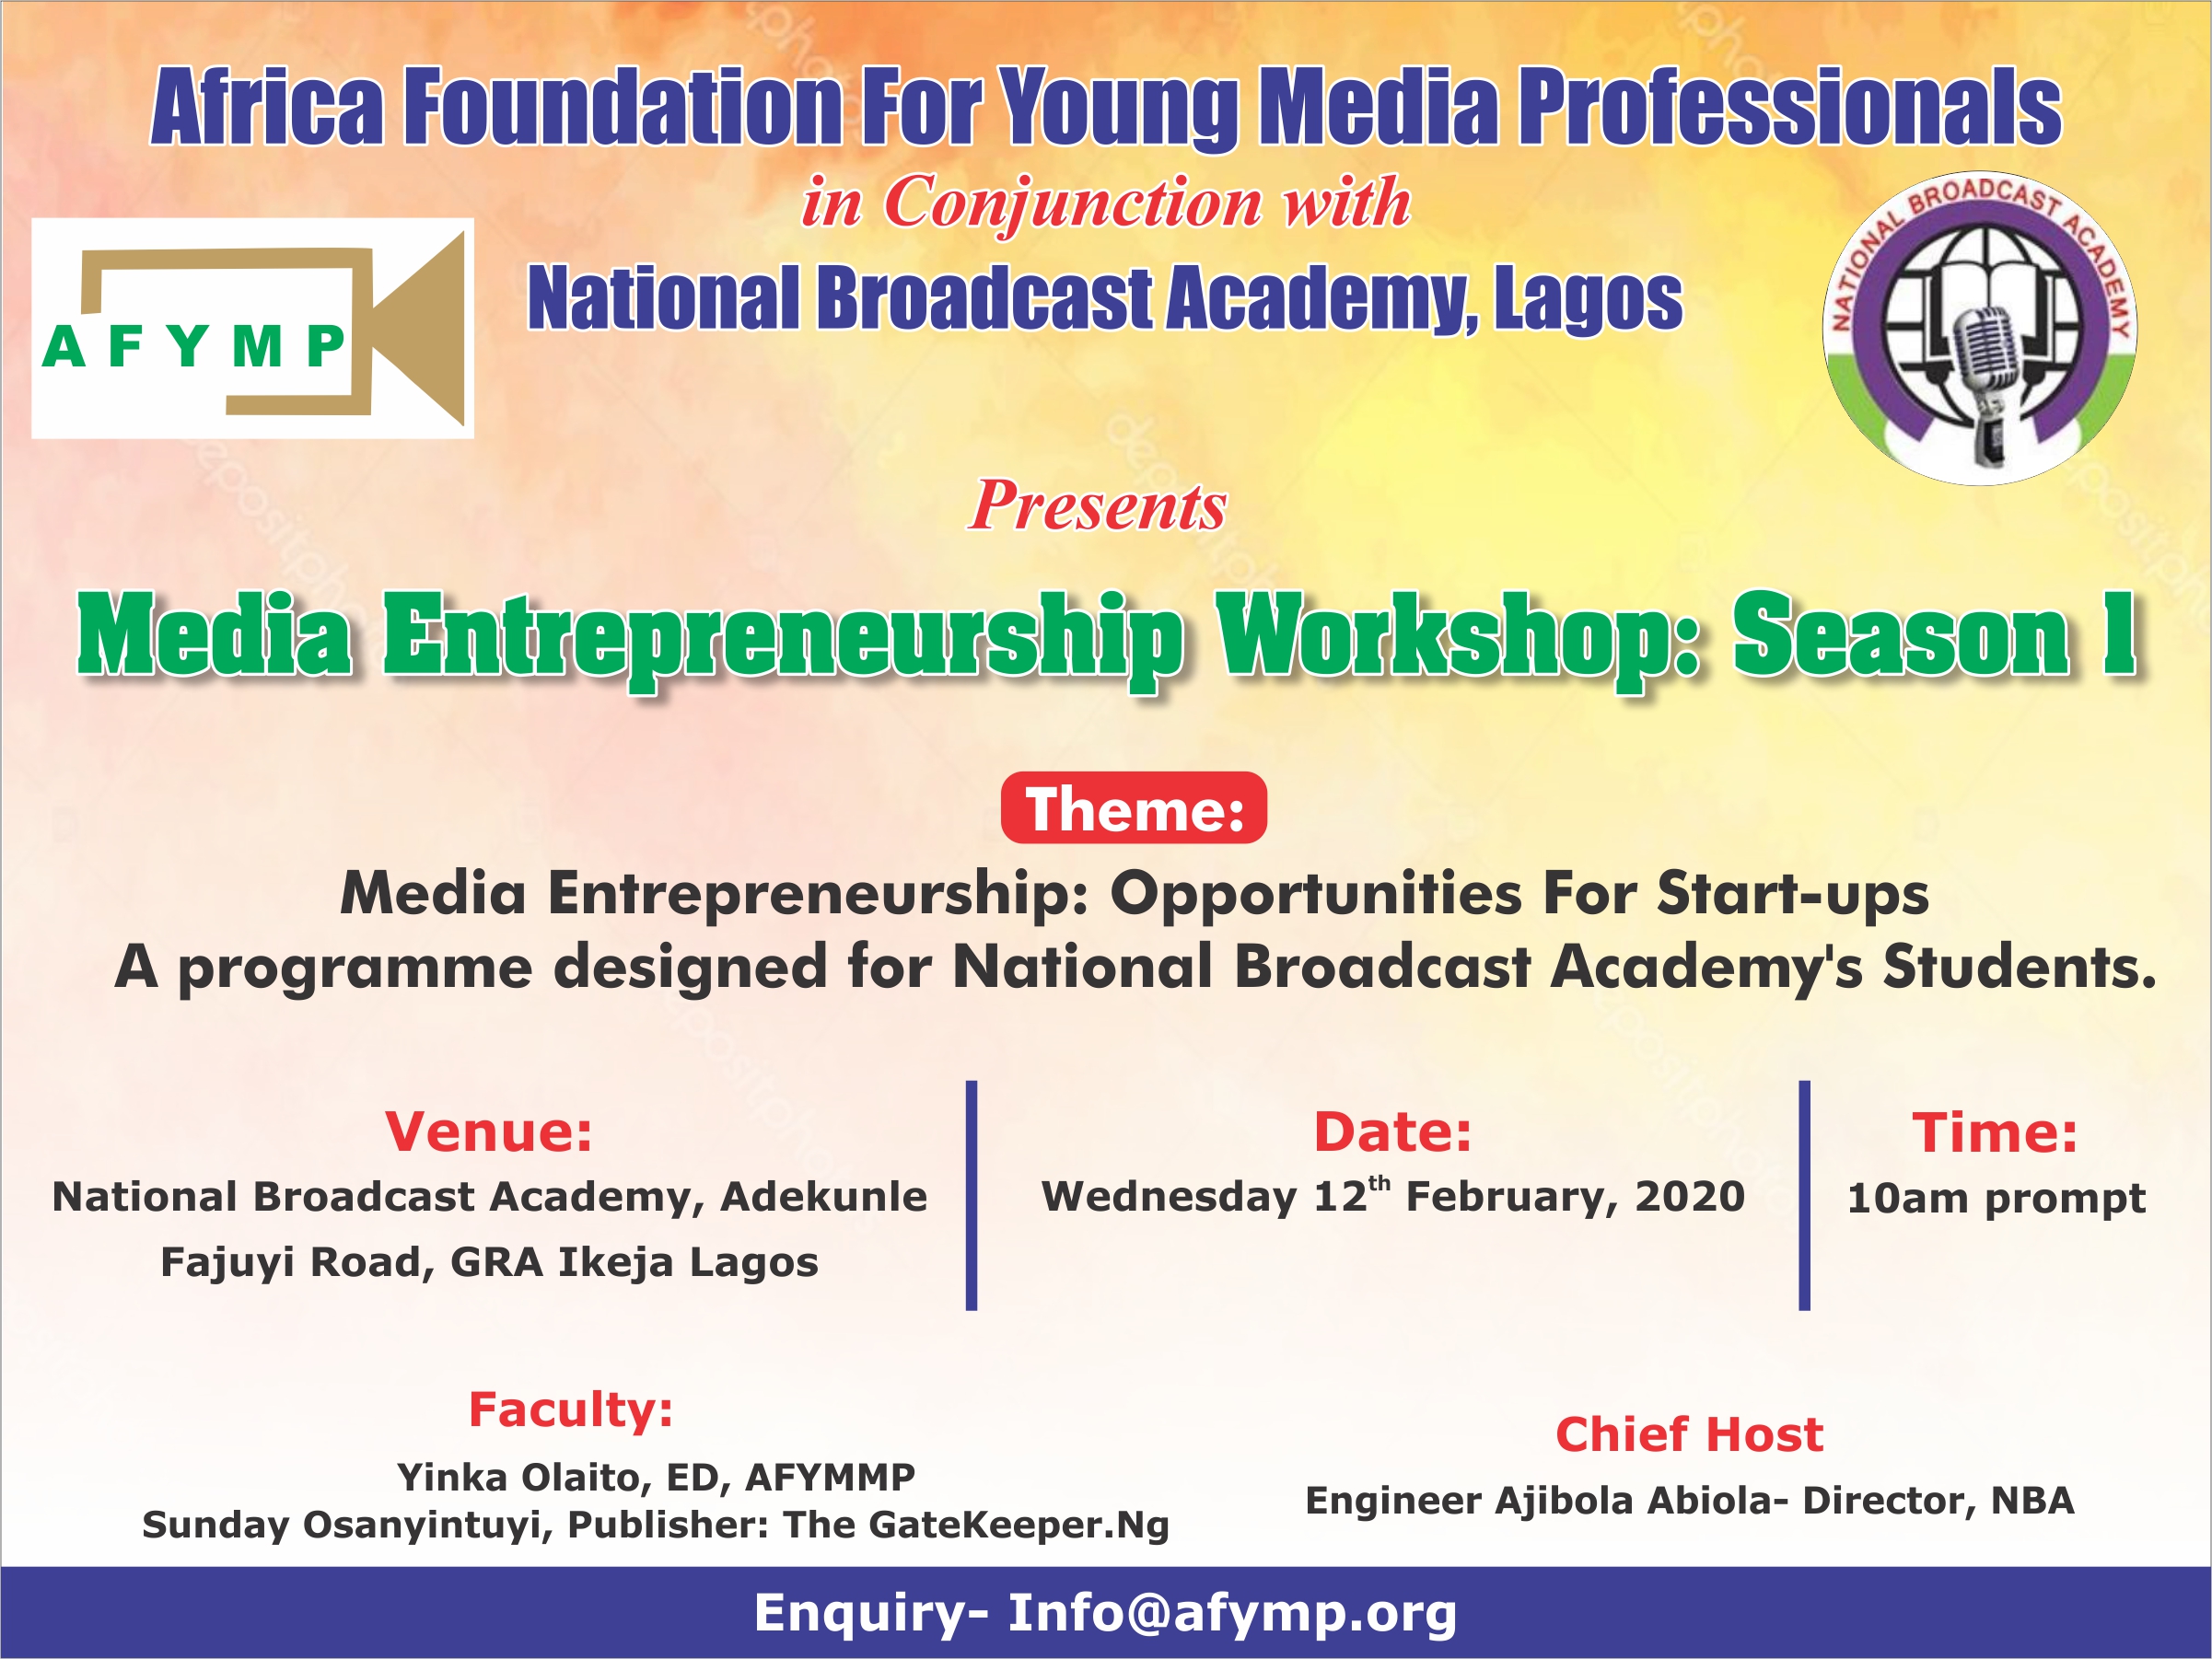 Media entreprenuership, AFYMP organizes Media entreprenuership workshop for National Broadcast Avademy Lagos Nigeria.jpg